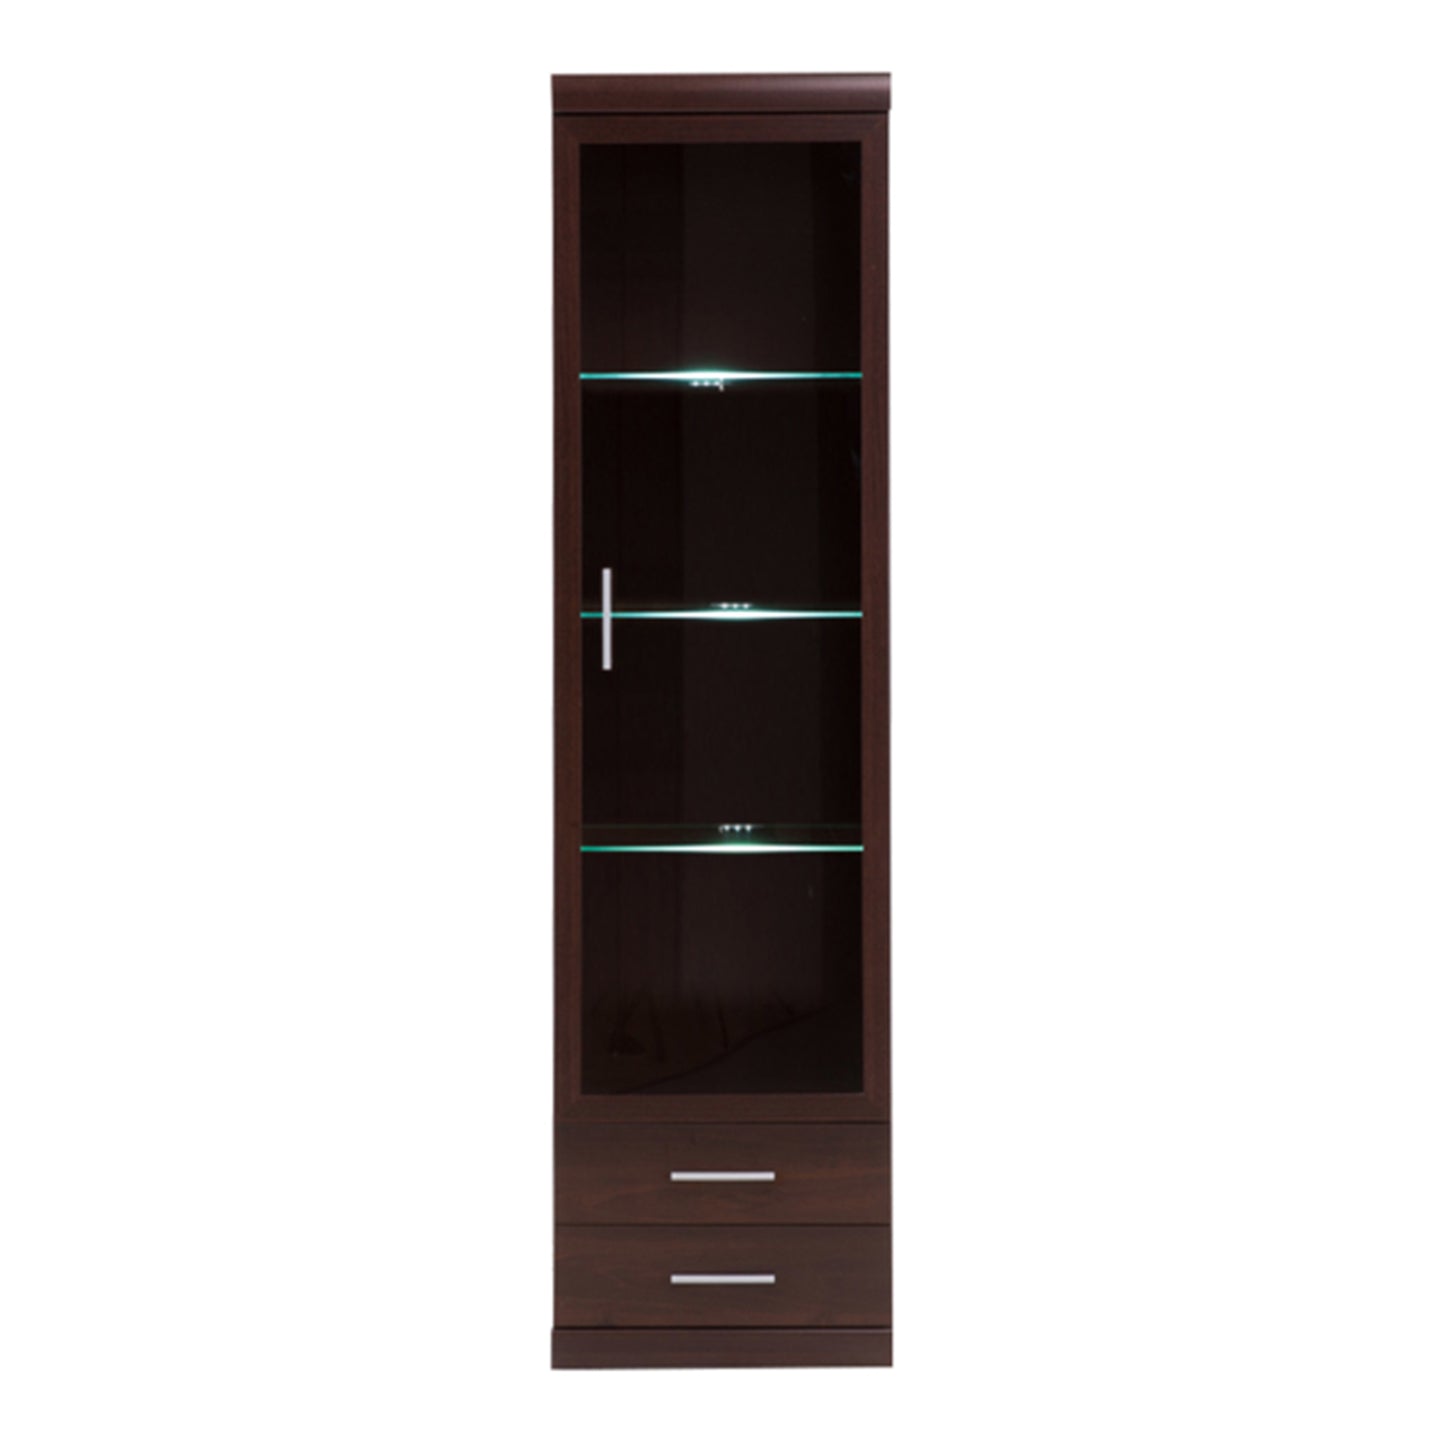 Imperial  Tall Glazed 1 Door 2 Drawer Narrow Cabinet in Dark Mahogany Melamine